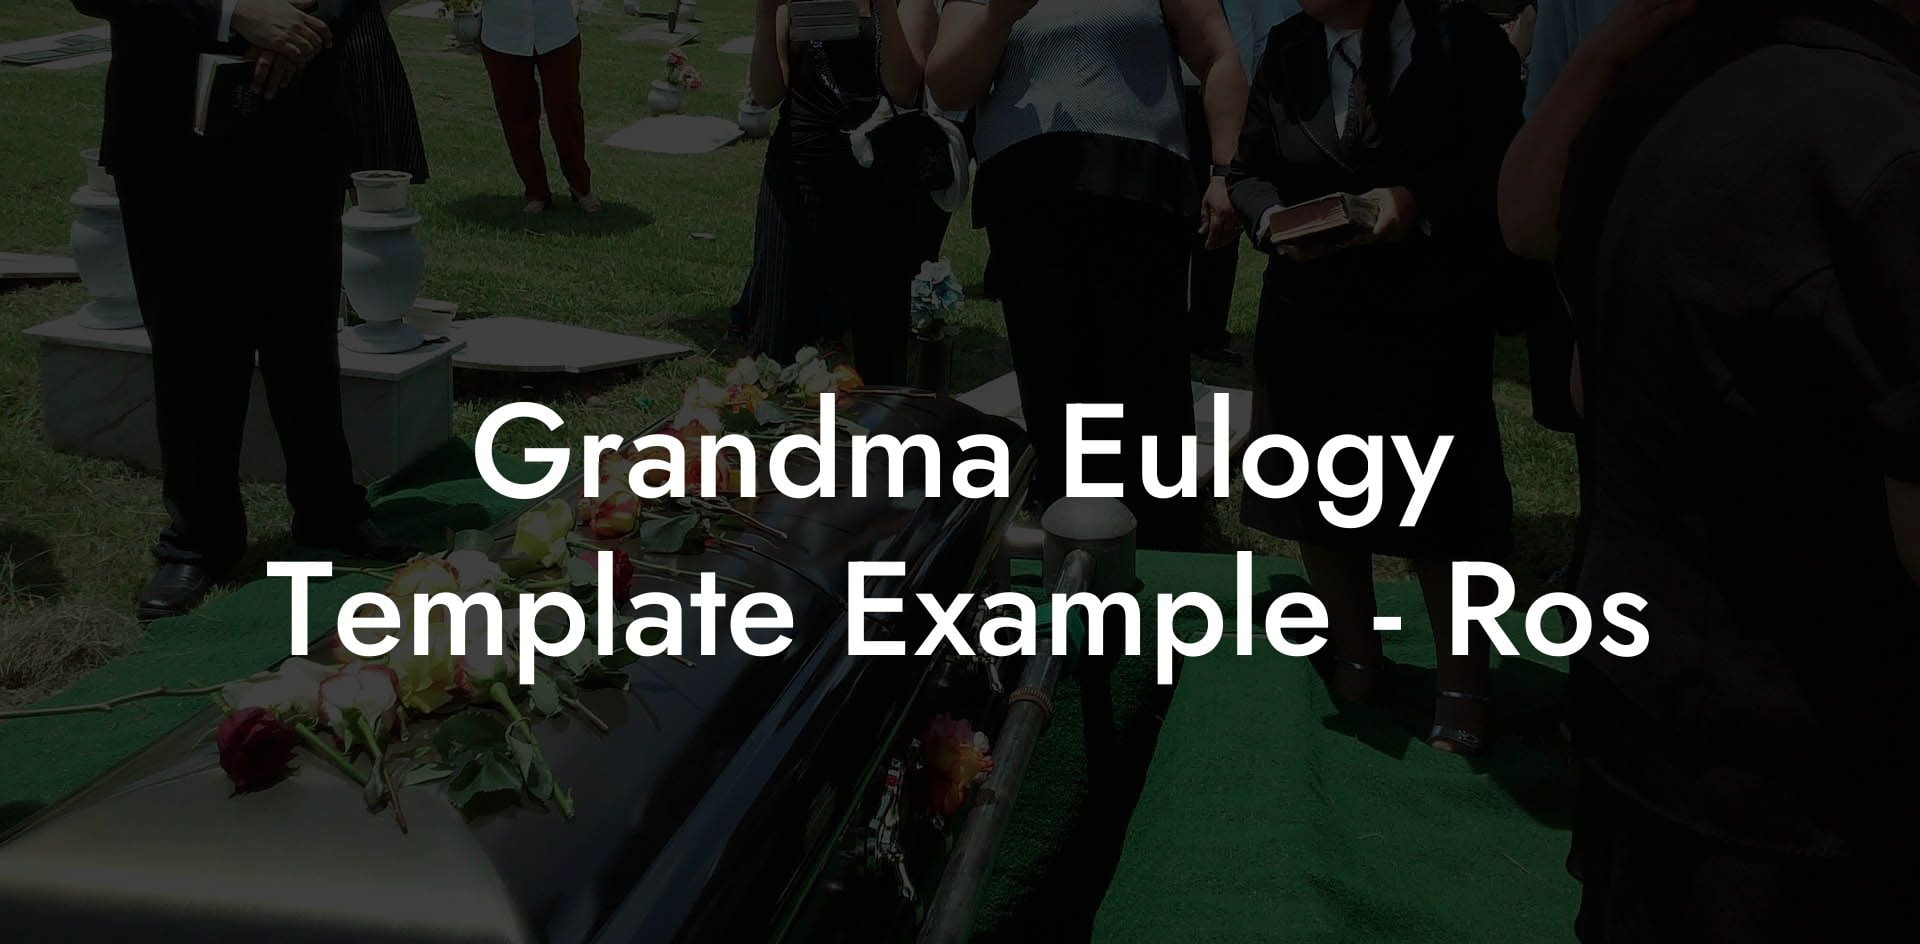 Grandma Eulogy Template Example - Ros